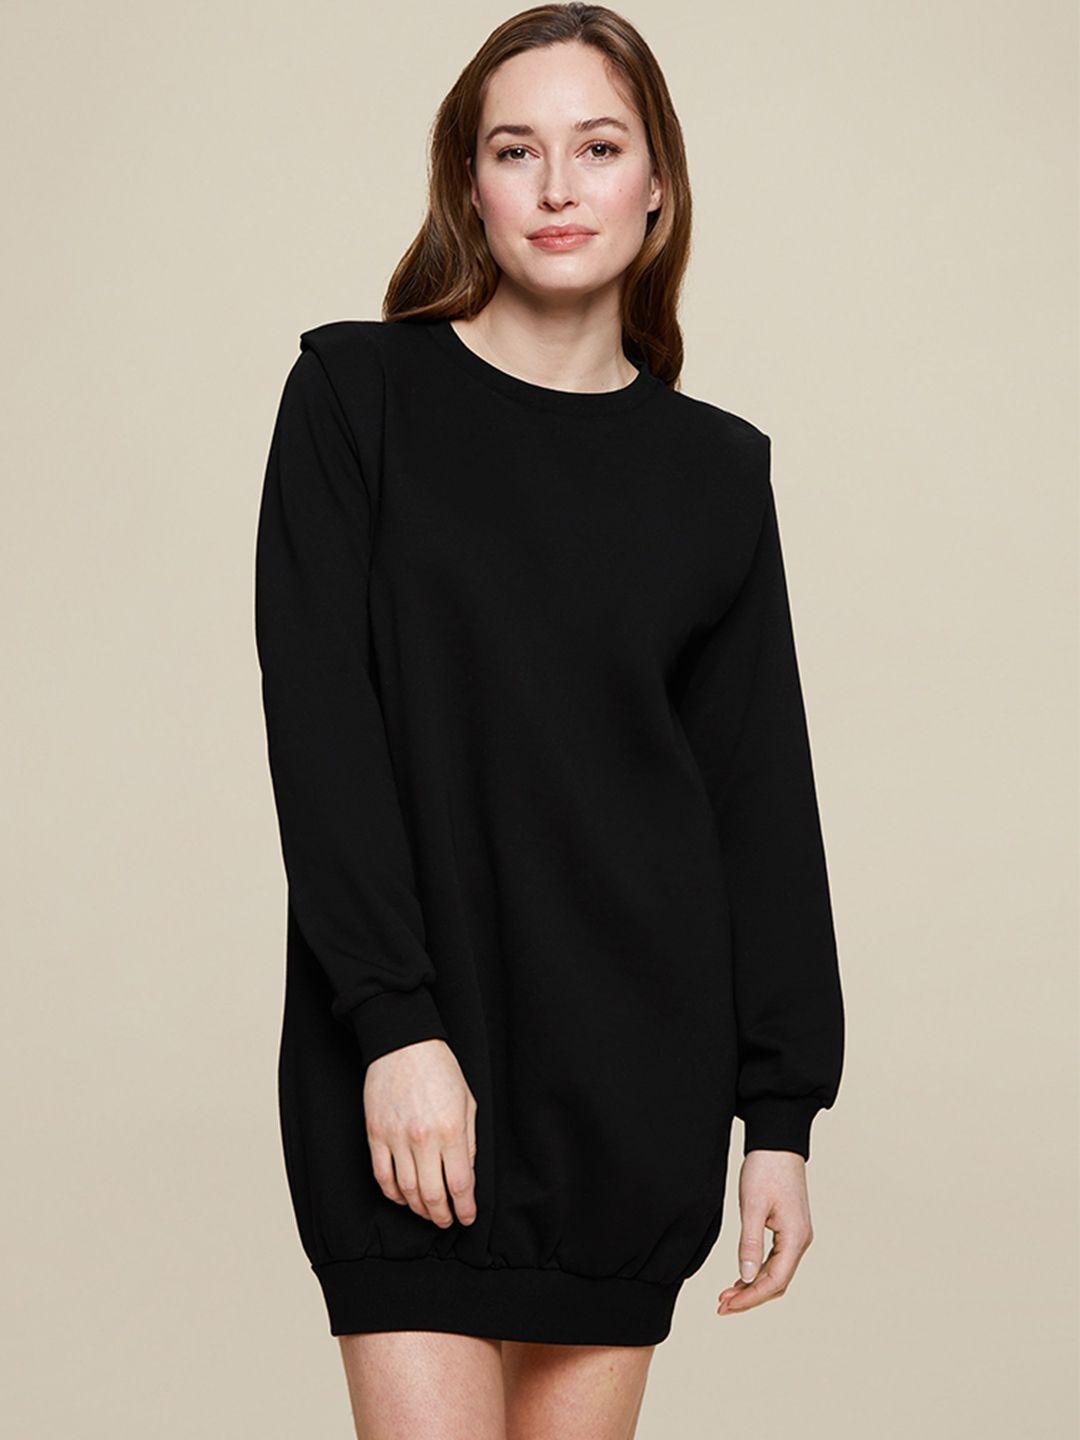 dorothy perkins women black solid jumper dress